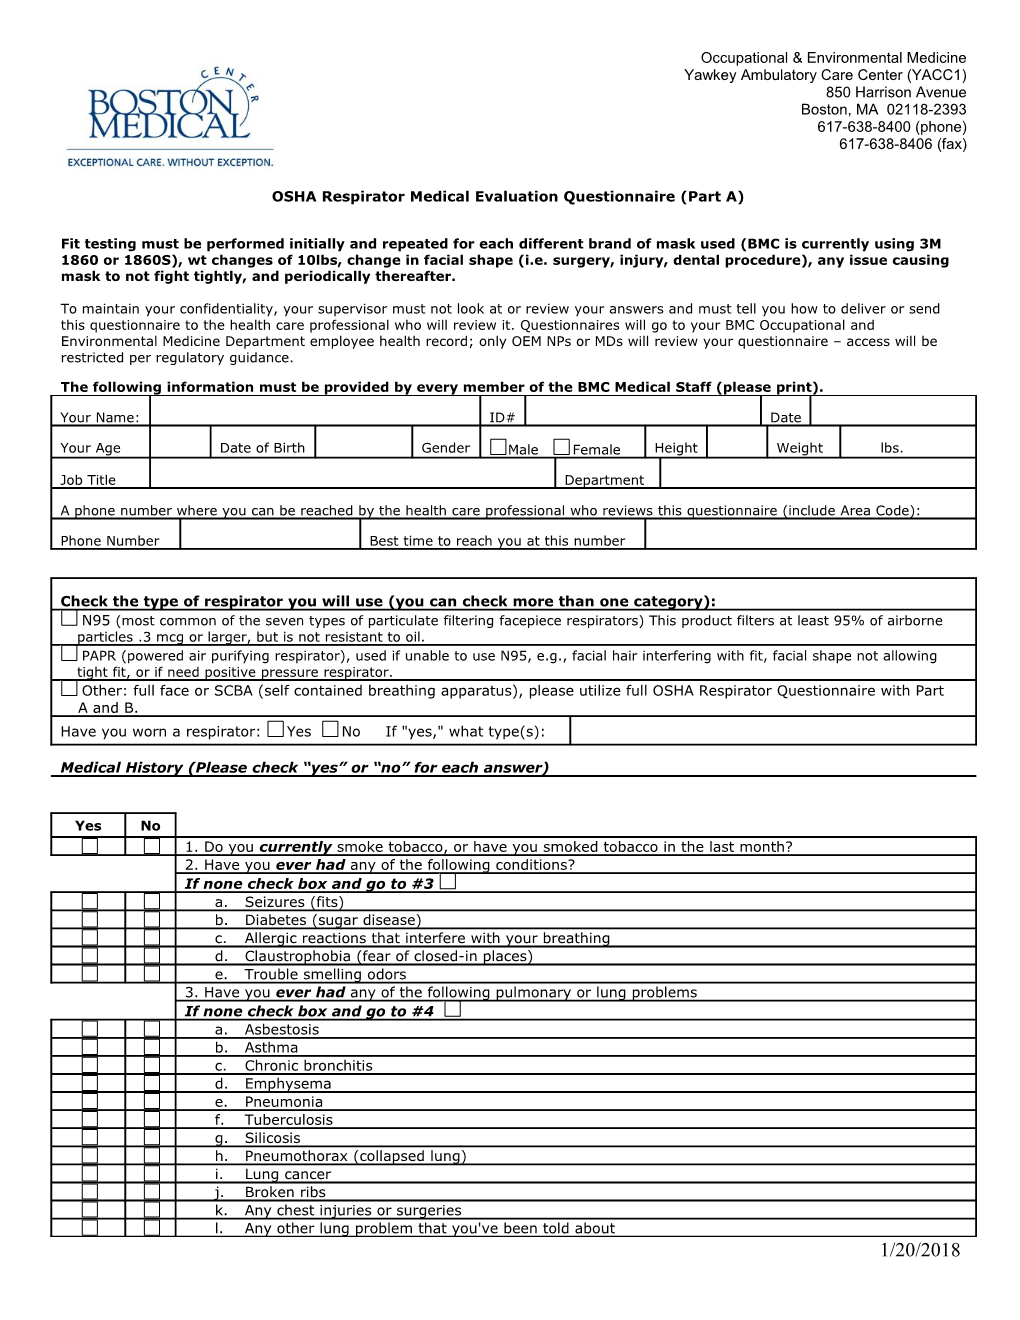 OSHA Respirator Medical Evaluation Questionnaire (Part A)